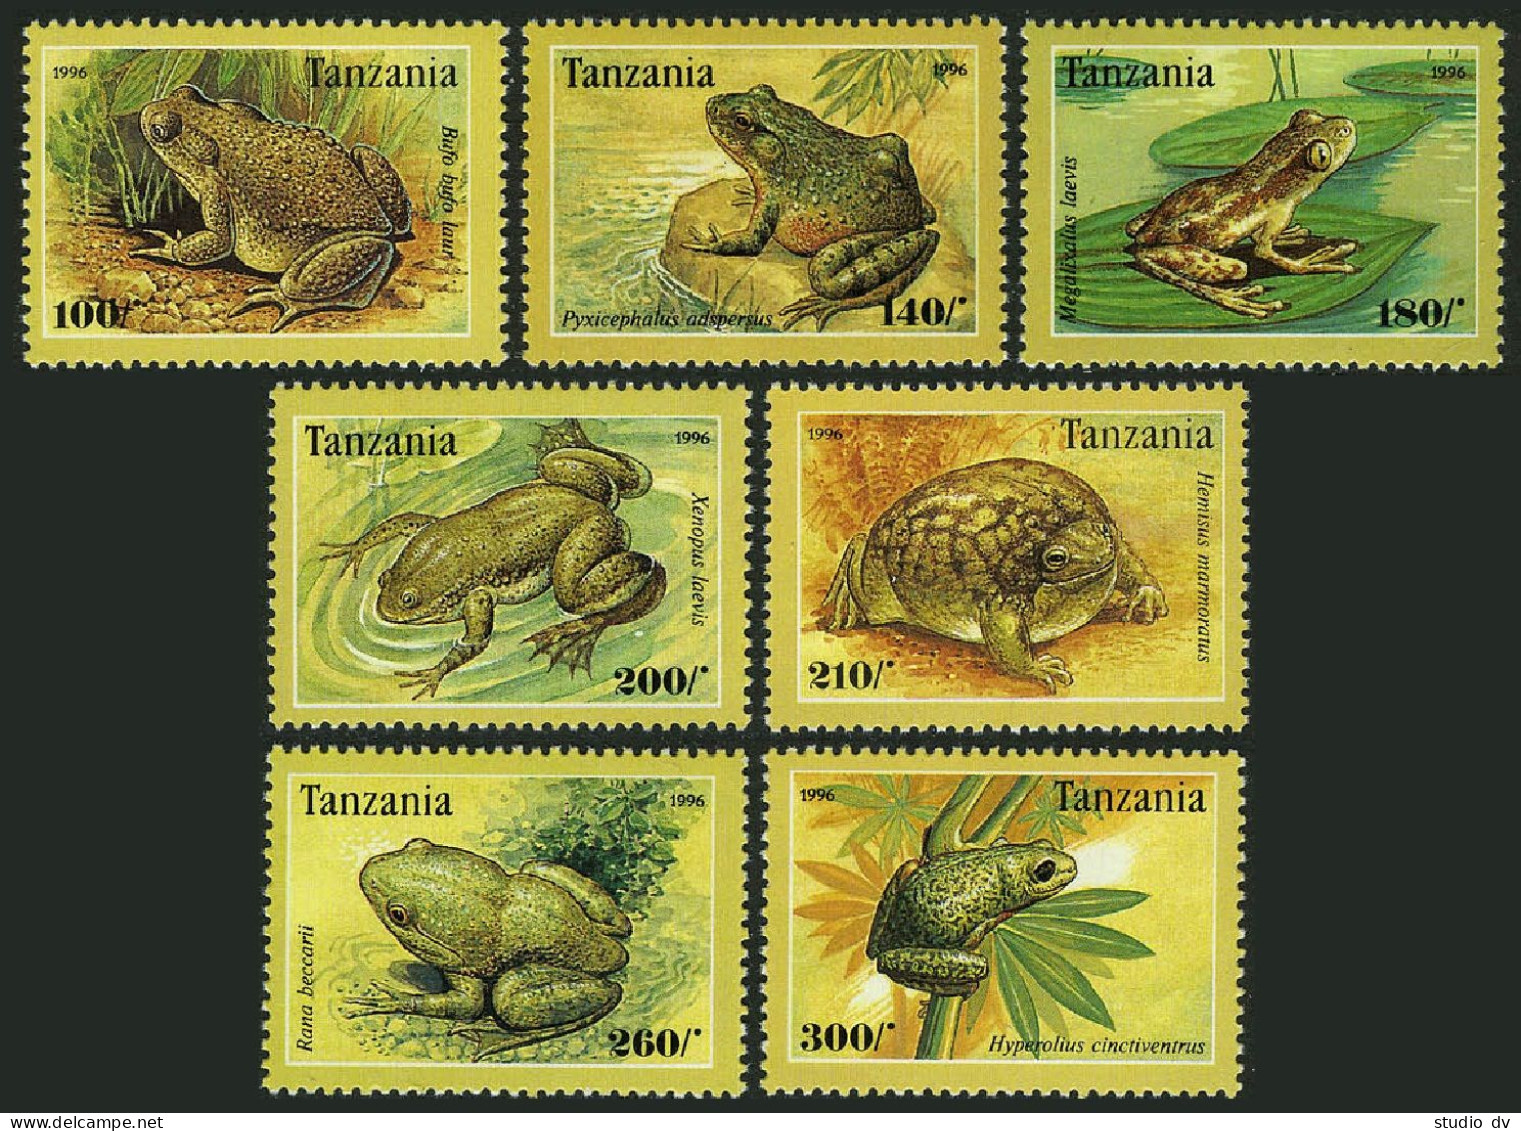 Tanzania 1453-1459,1460,MNH. Frogs 1996.Rana Goliath. - Tanzanie (1964-...)